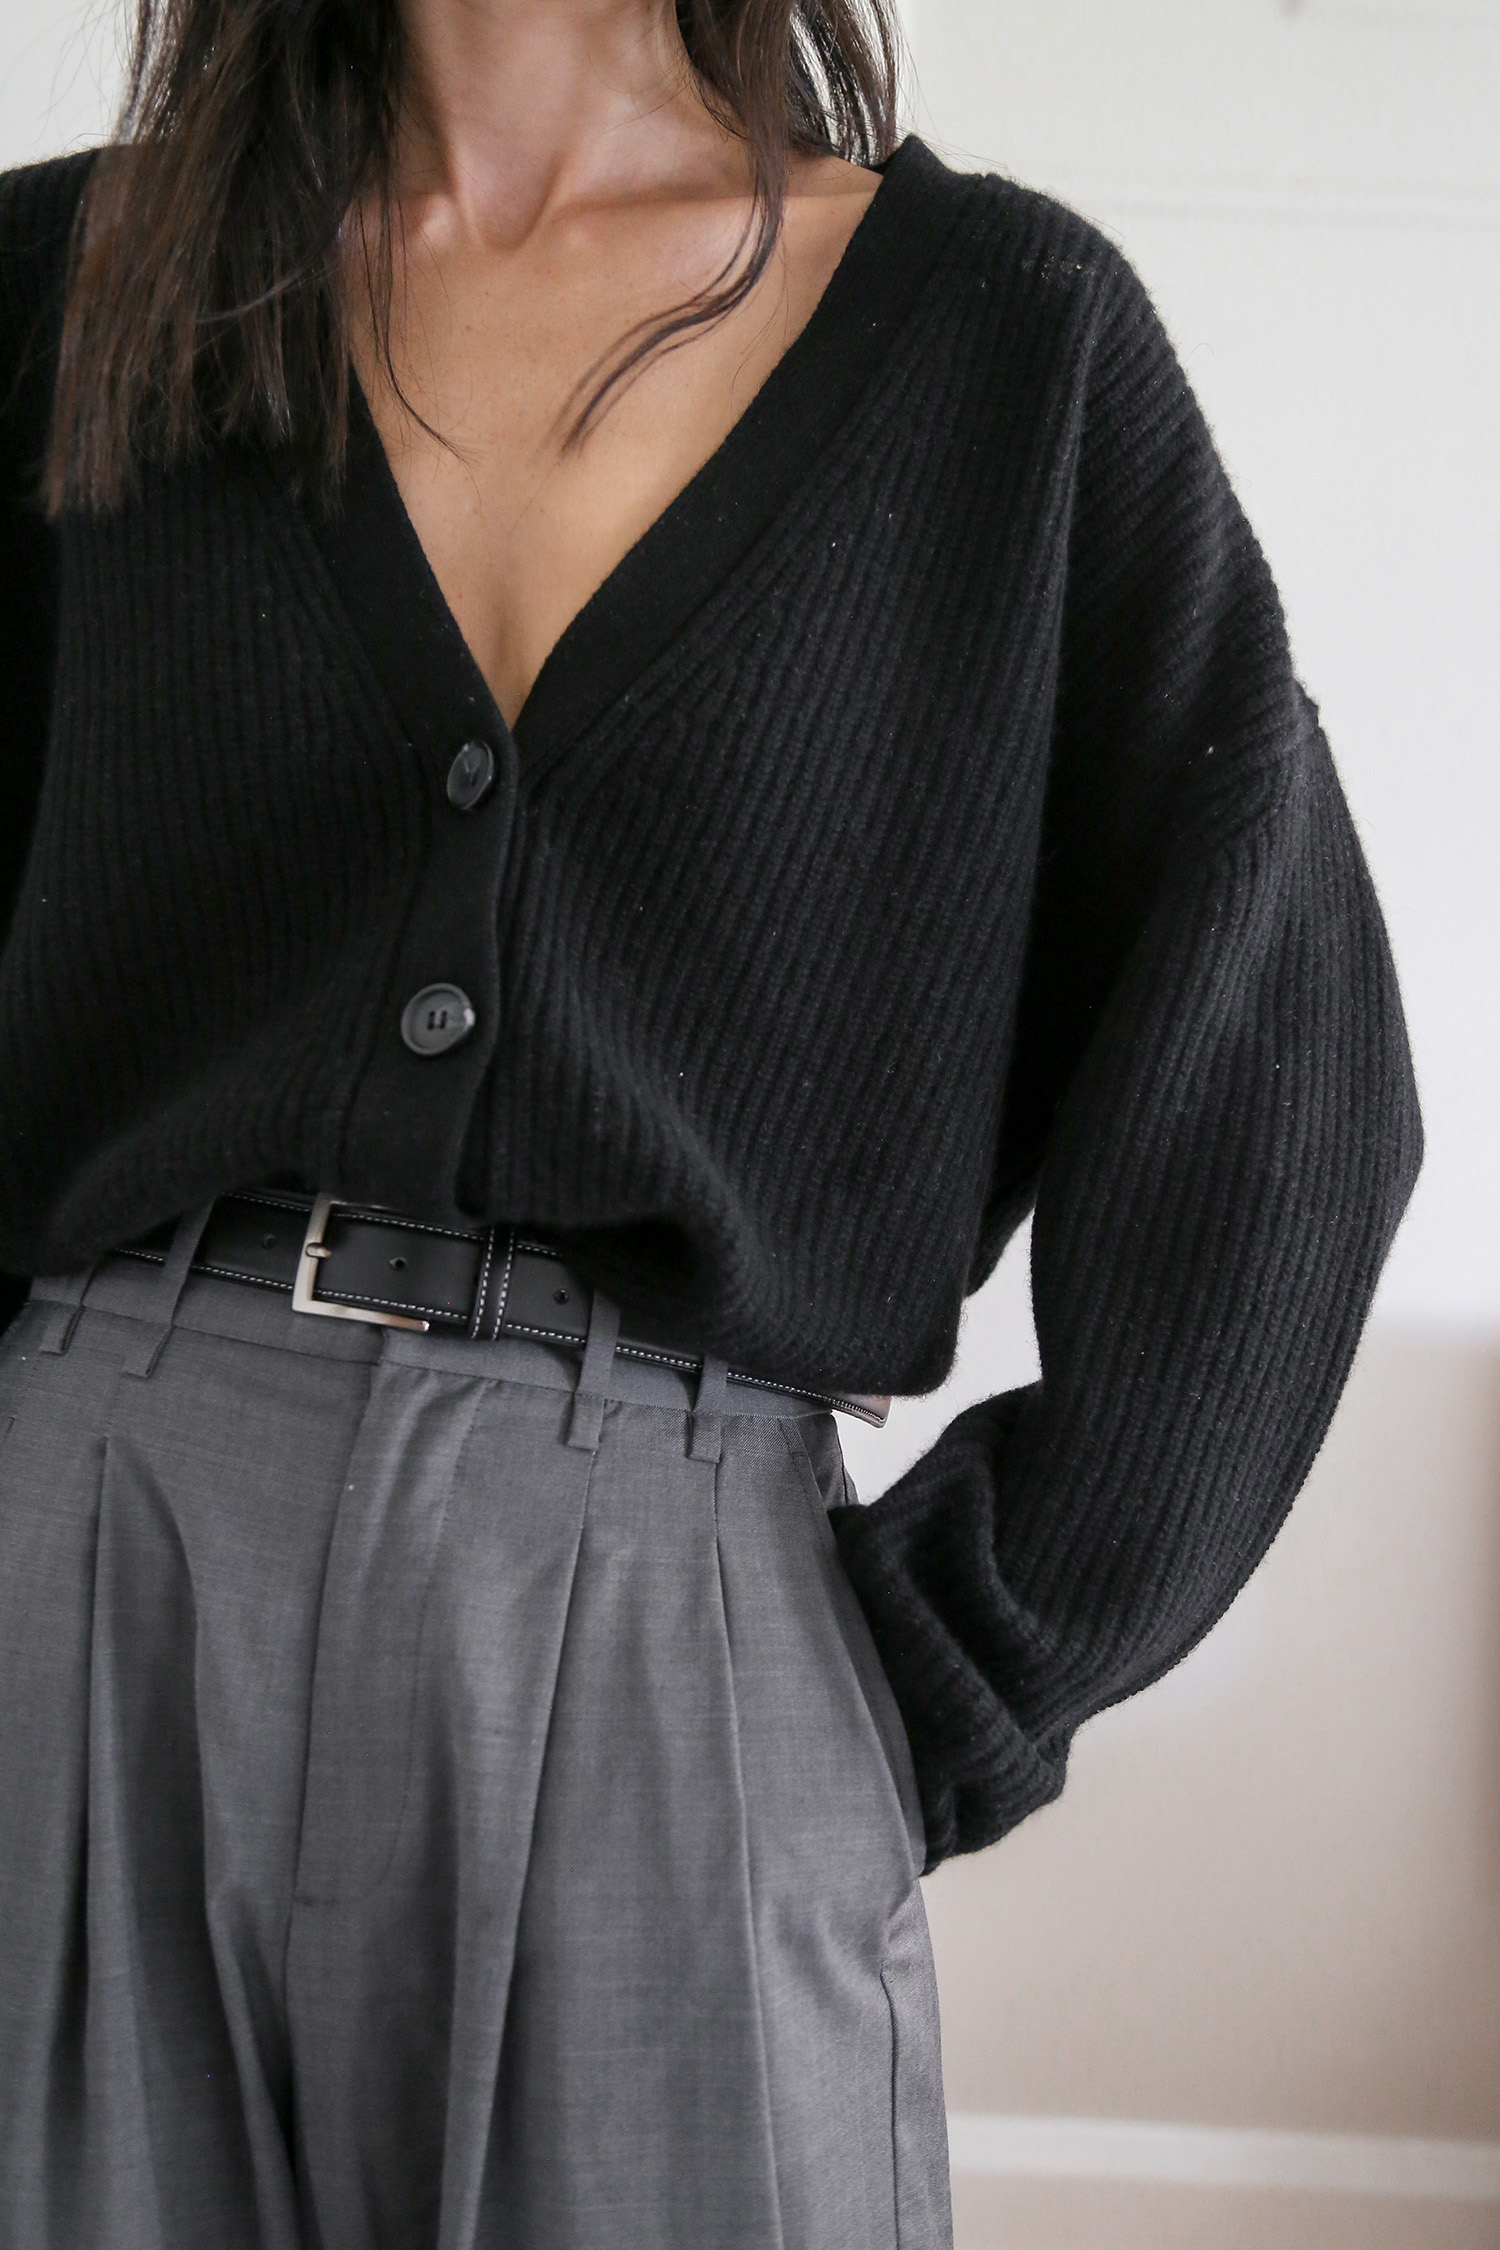 Jenni Kayne black cashmere cropped cocoon cardigan review